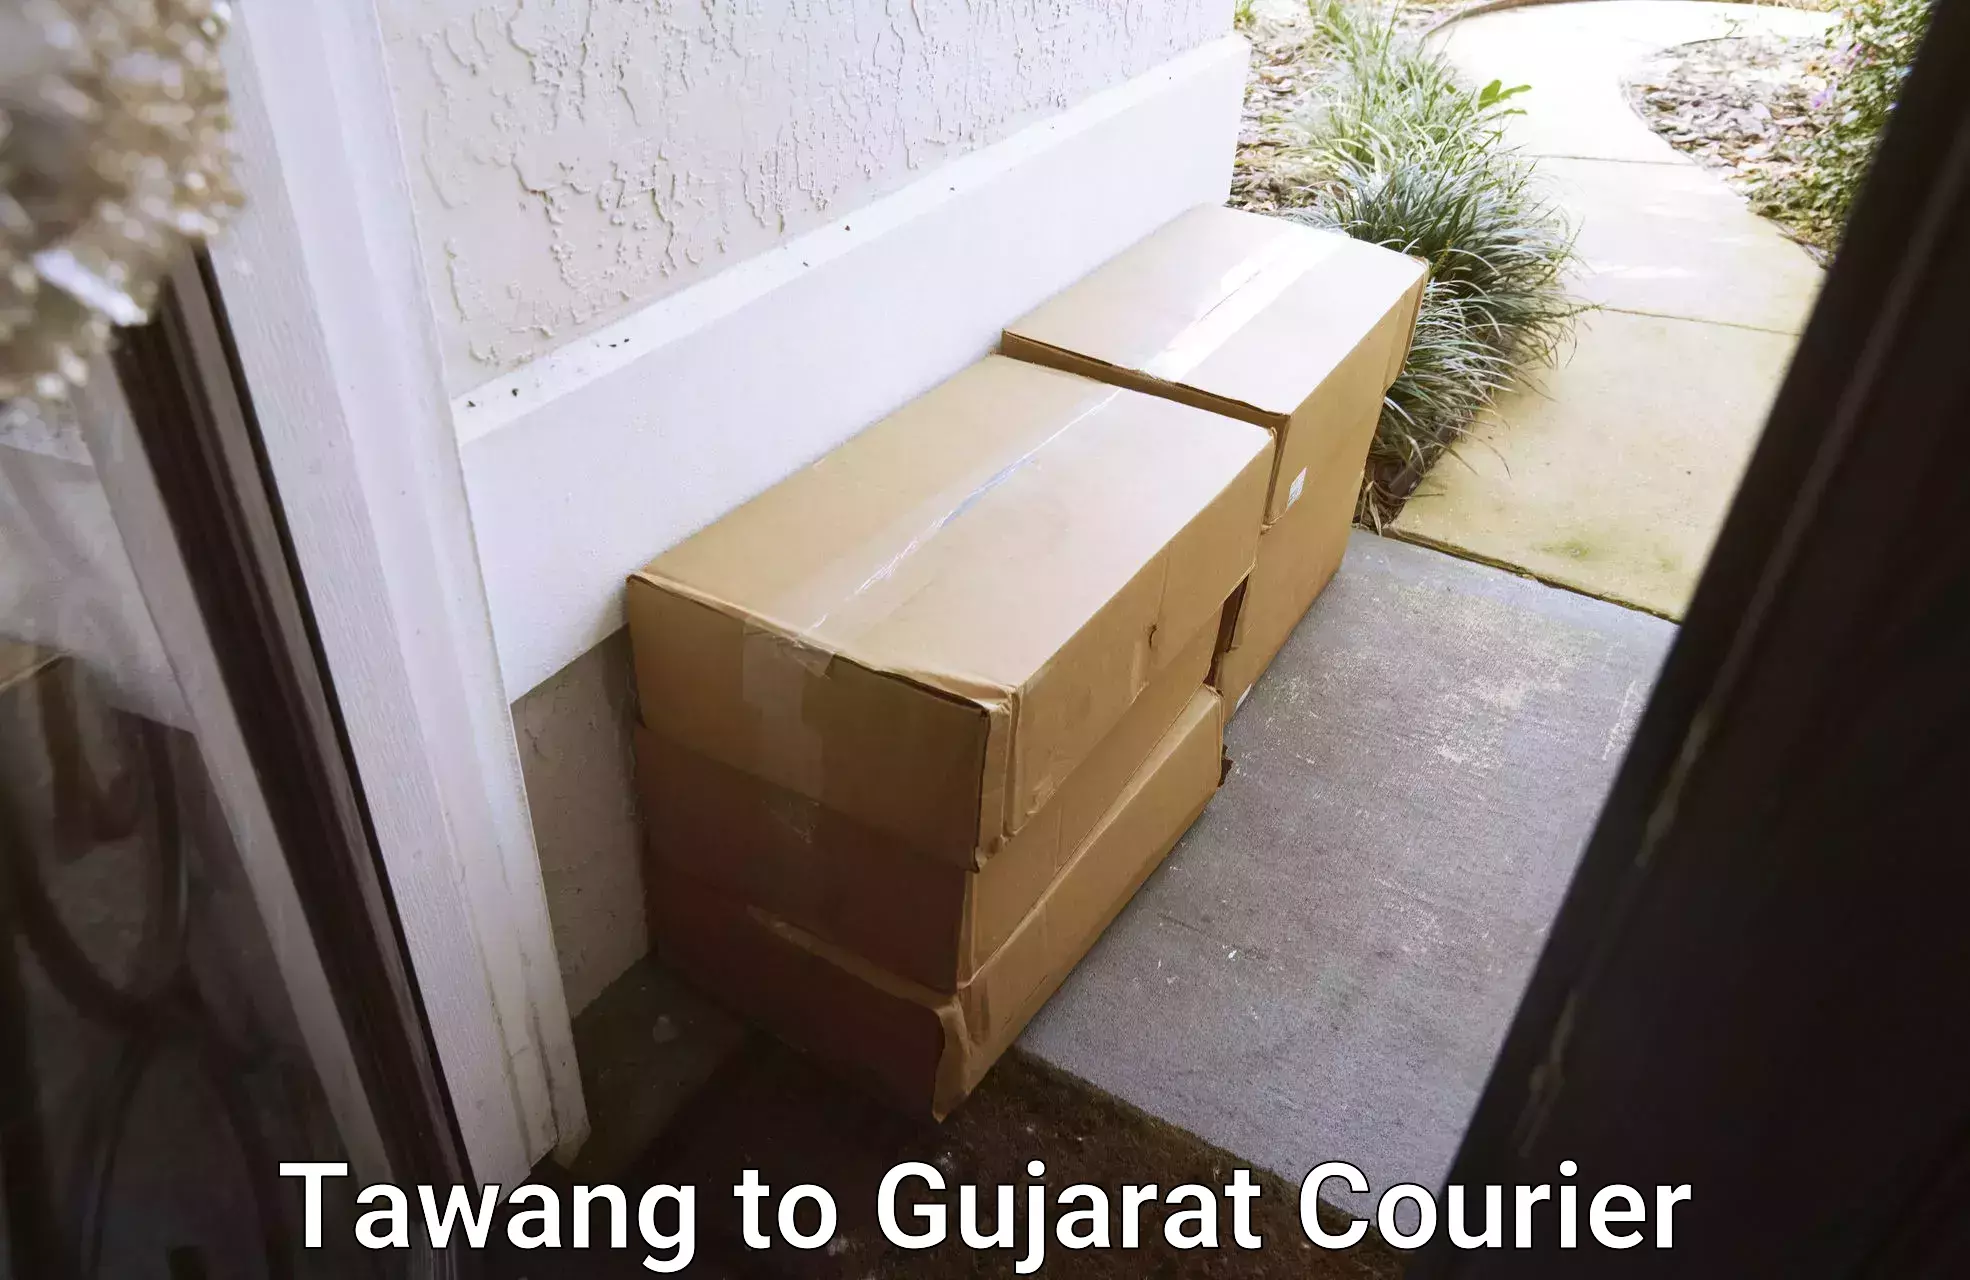 24/7 courier service Tawang to Gujarat